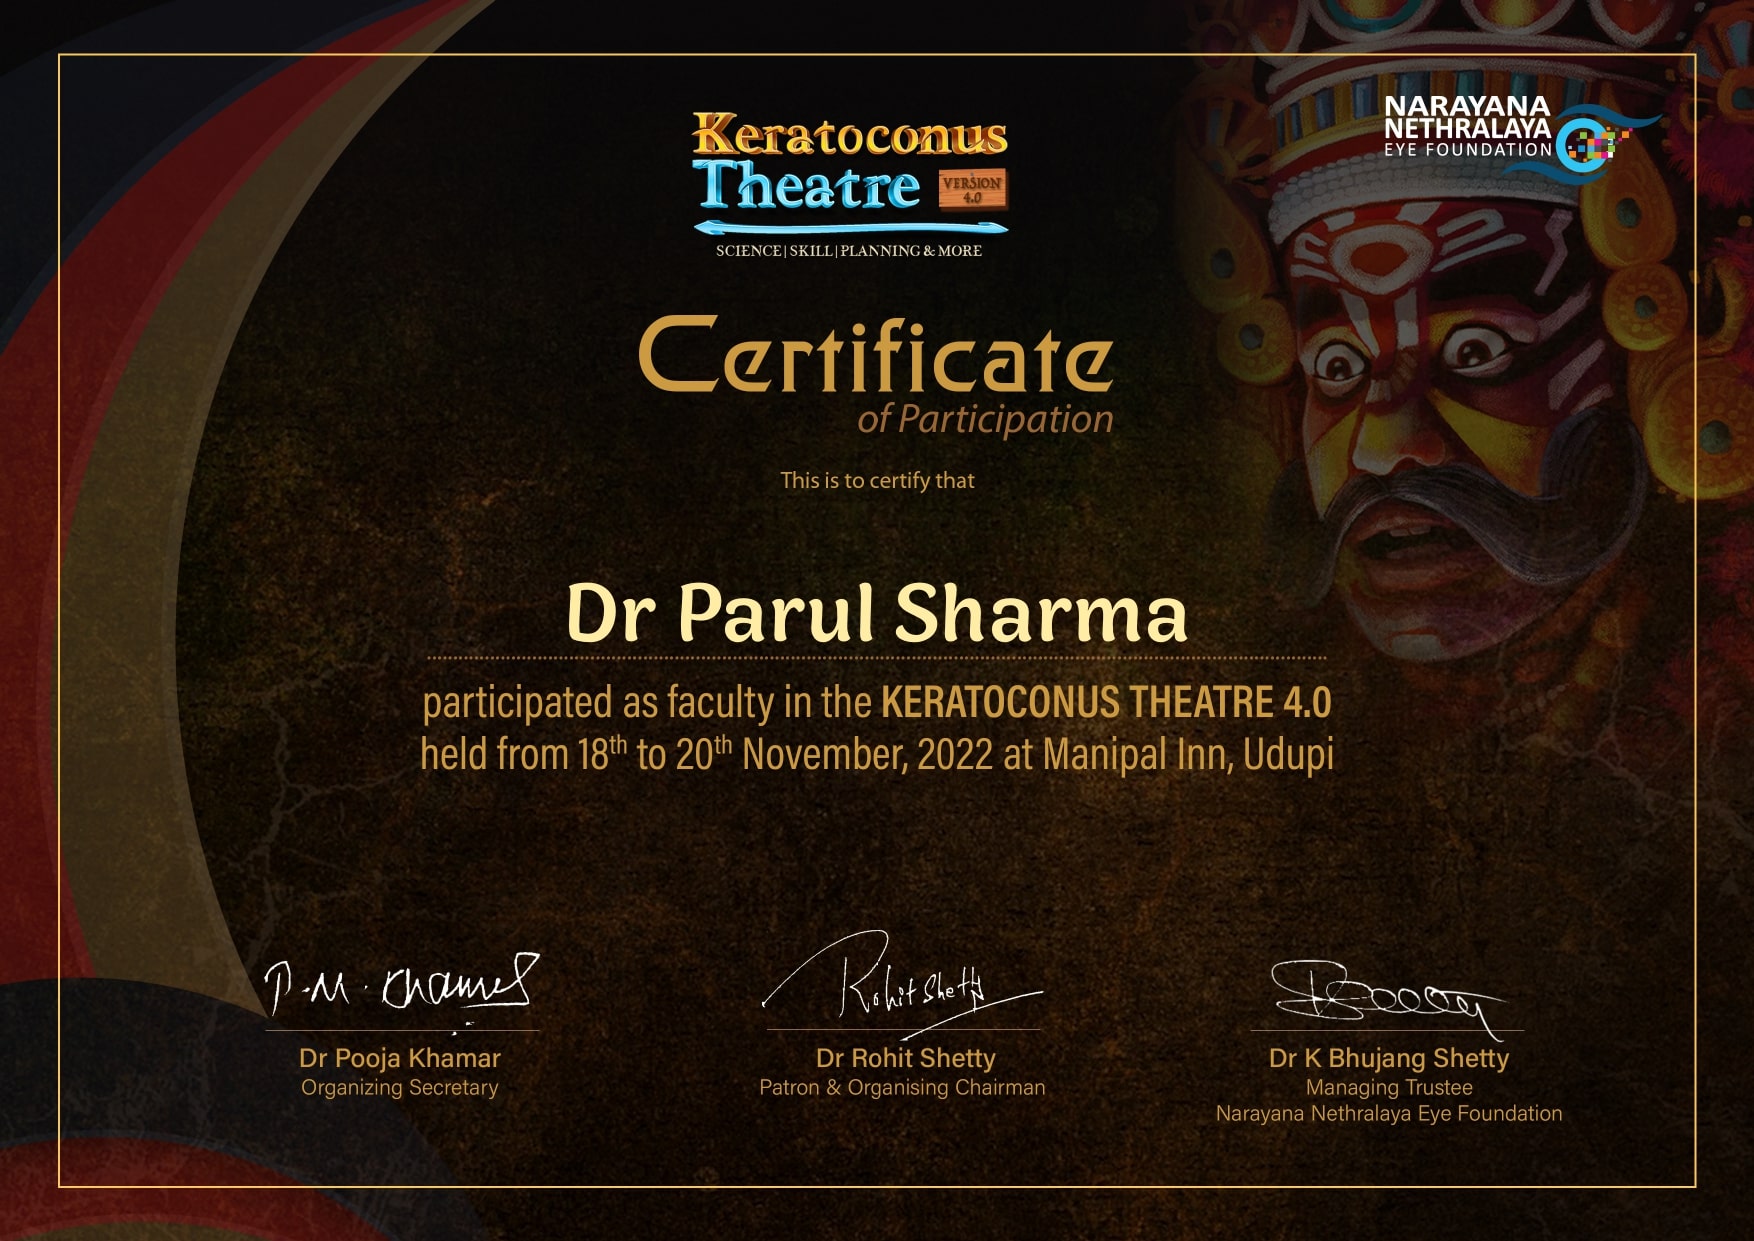 Keratoconus theatre Certificate of participation